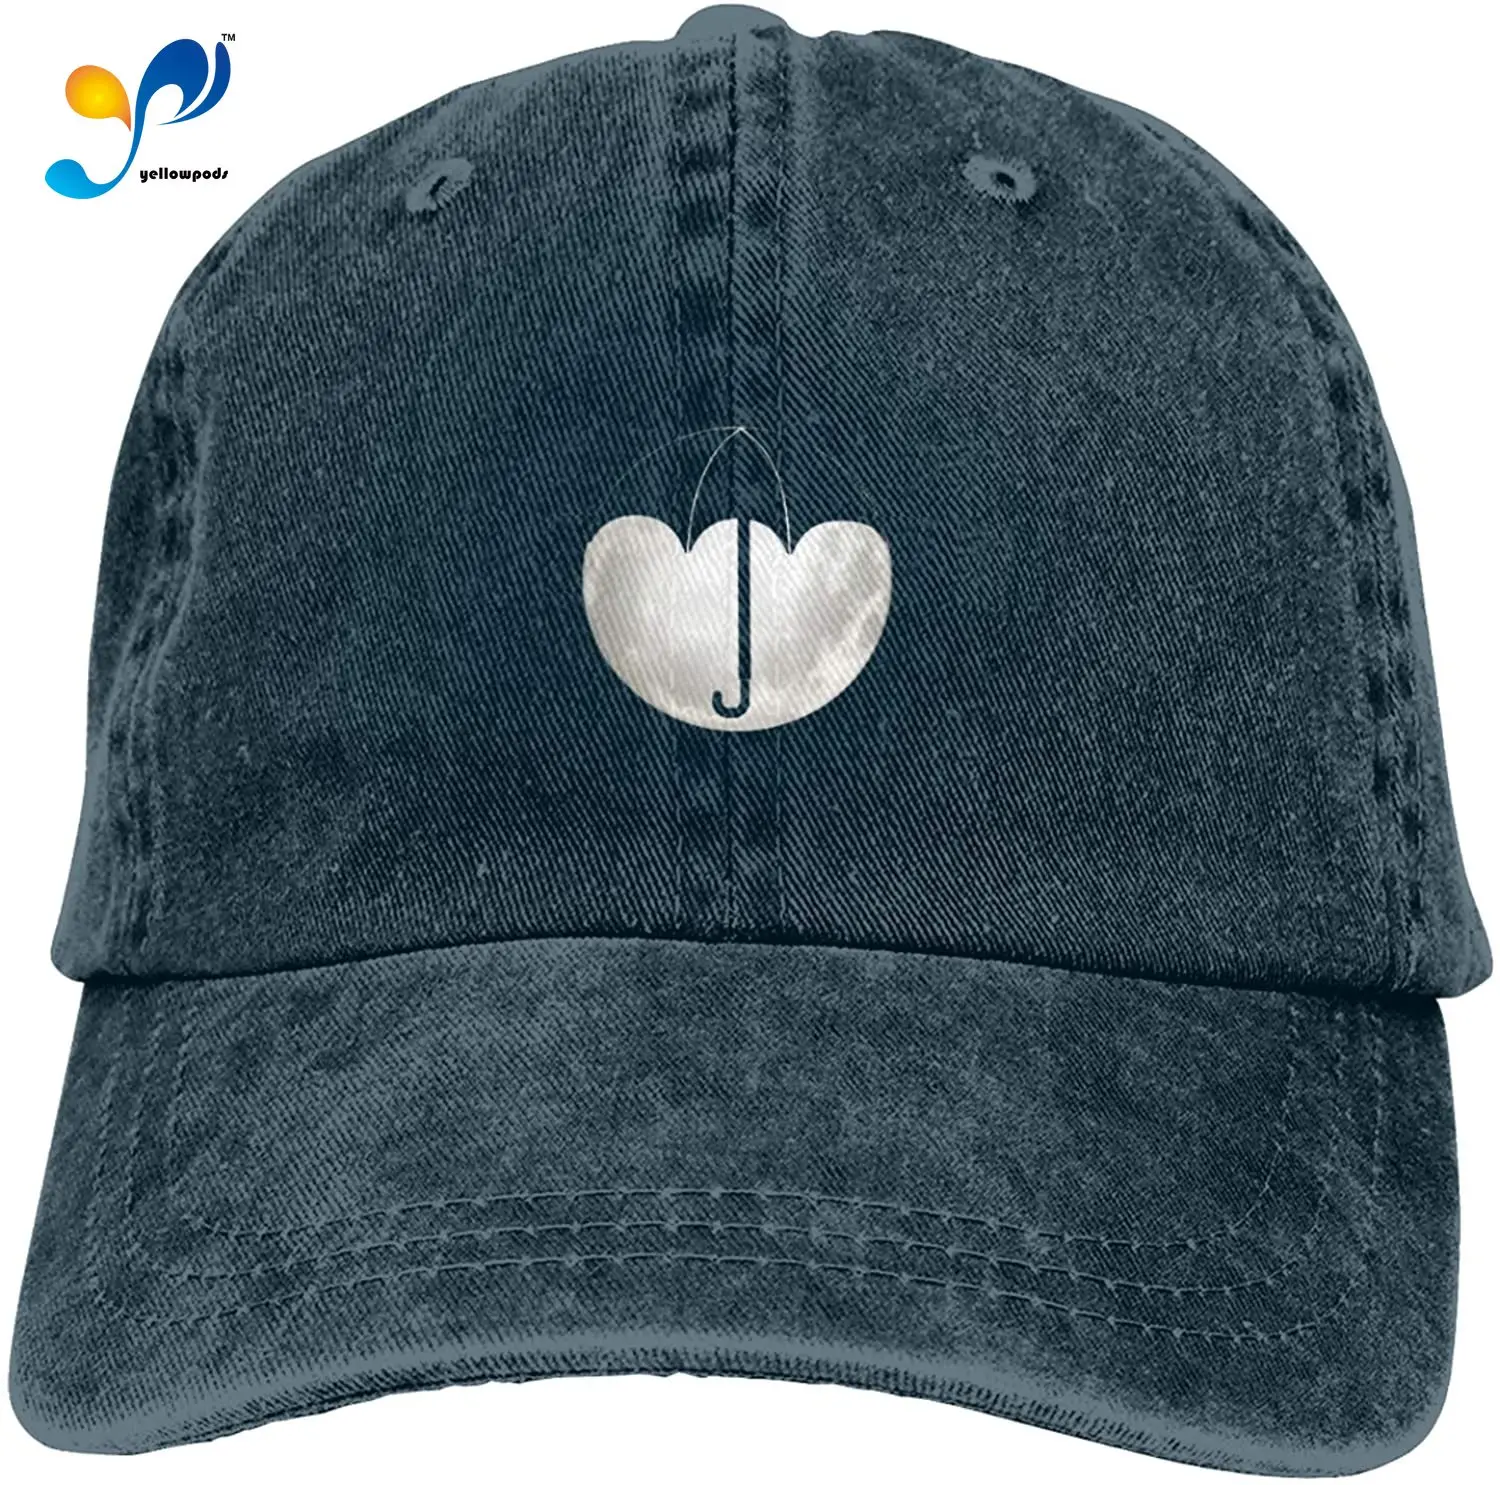 

Umbrella-Academy Light Moon Baseball Caps Cotton Dad Hat Adjustable Sandwich Hat,Navy